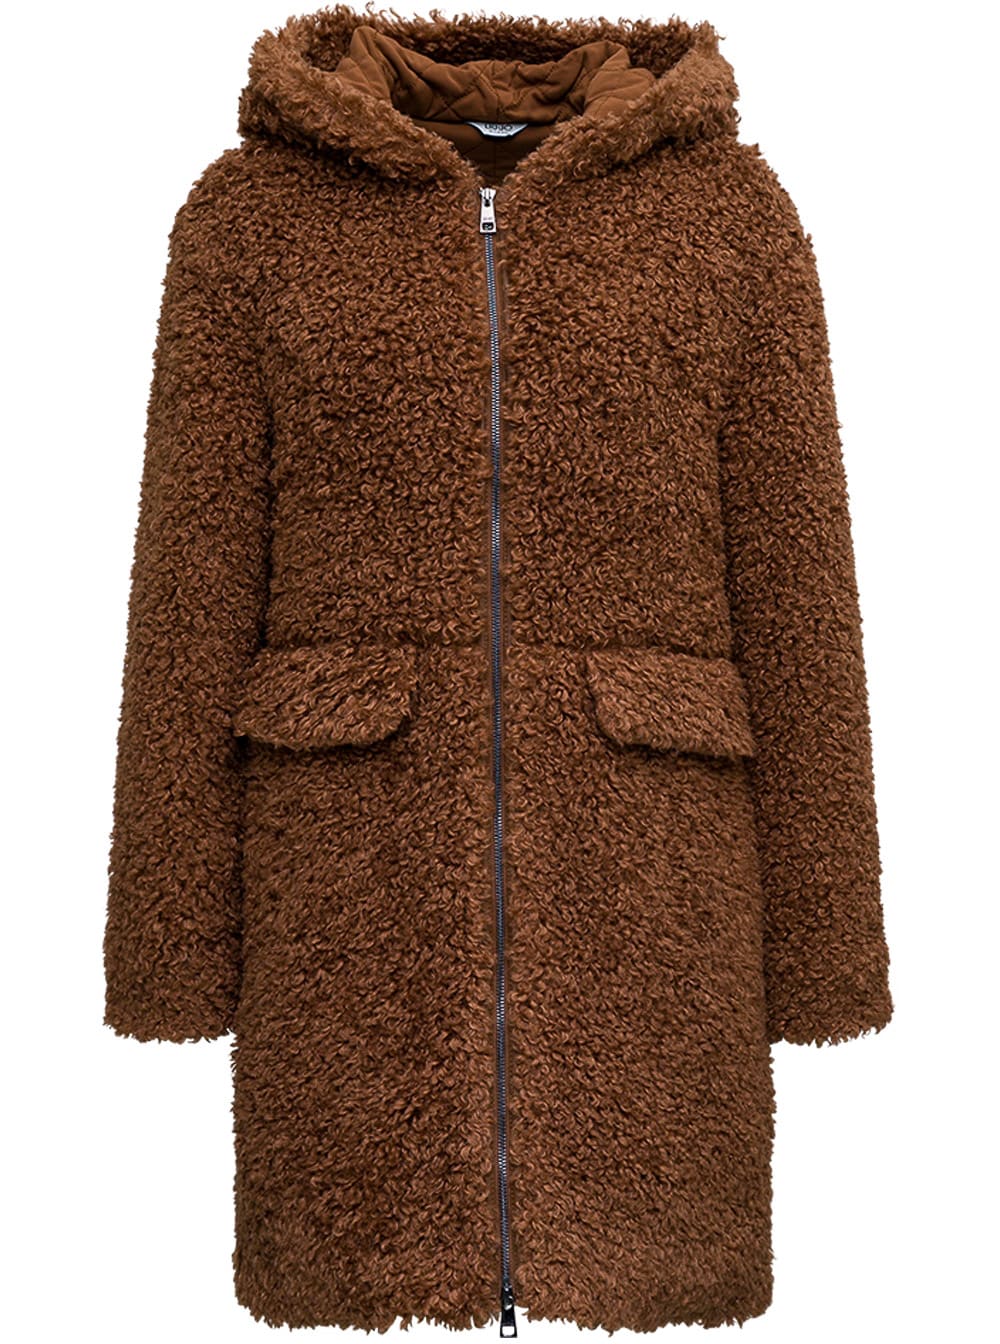 Liu-Jo Brown Teddy Coat With Pockets